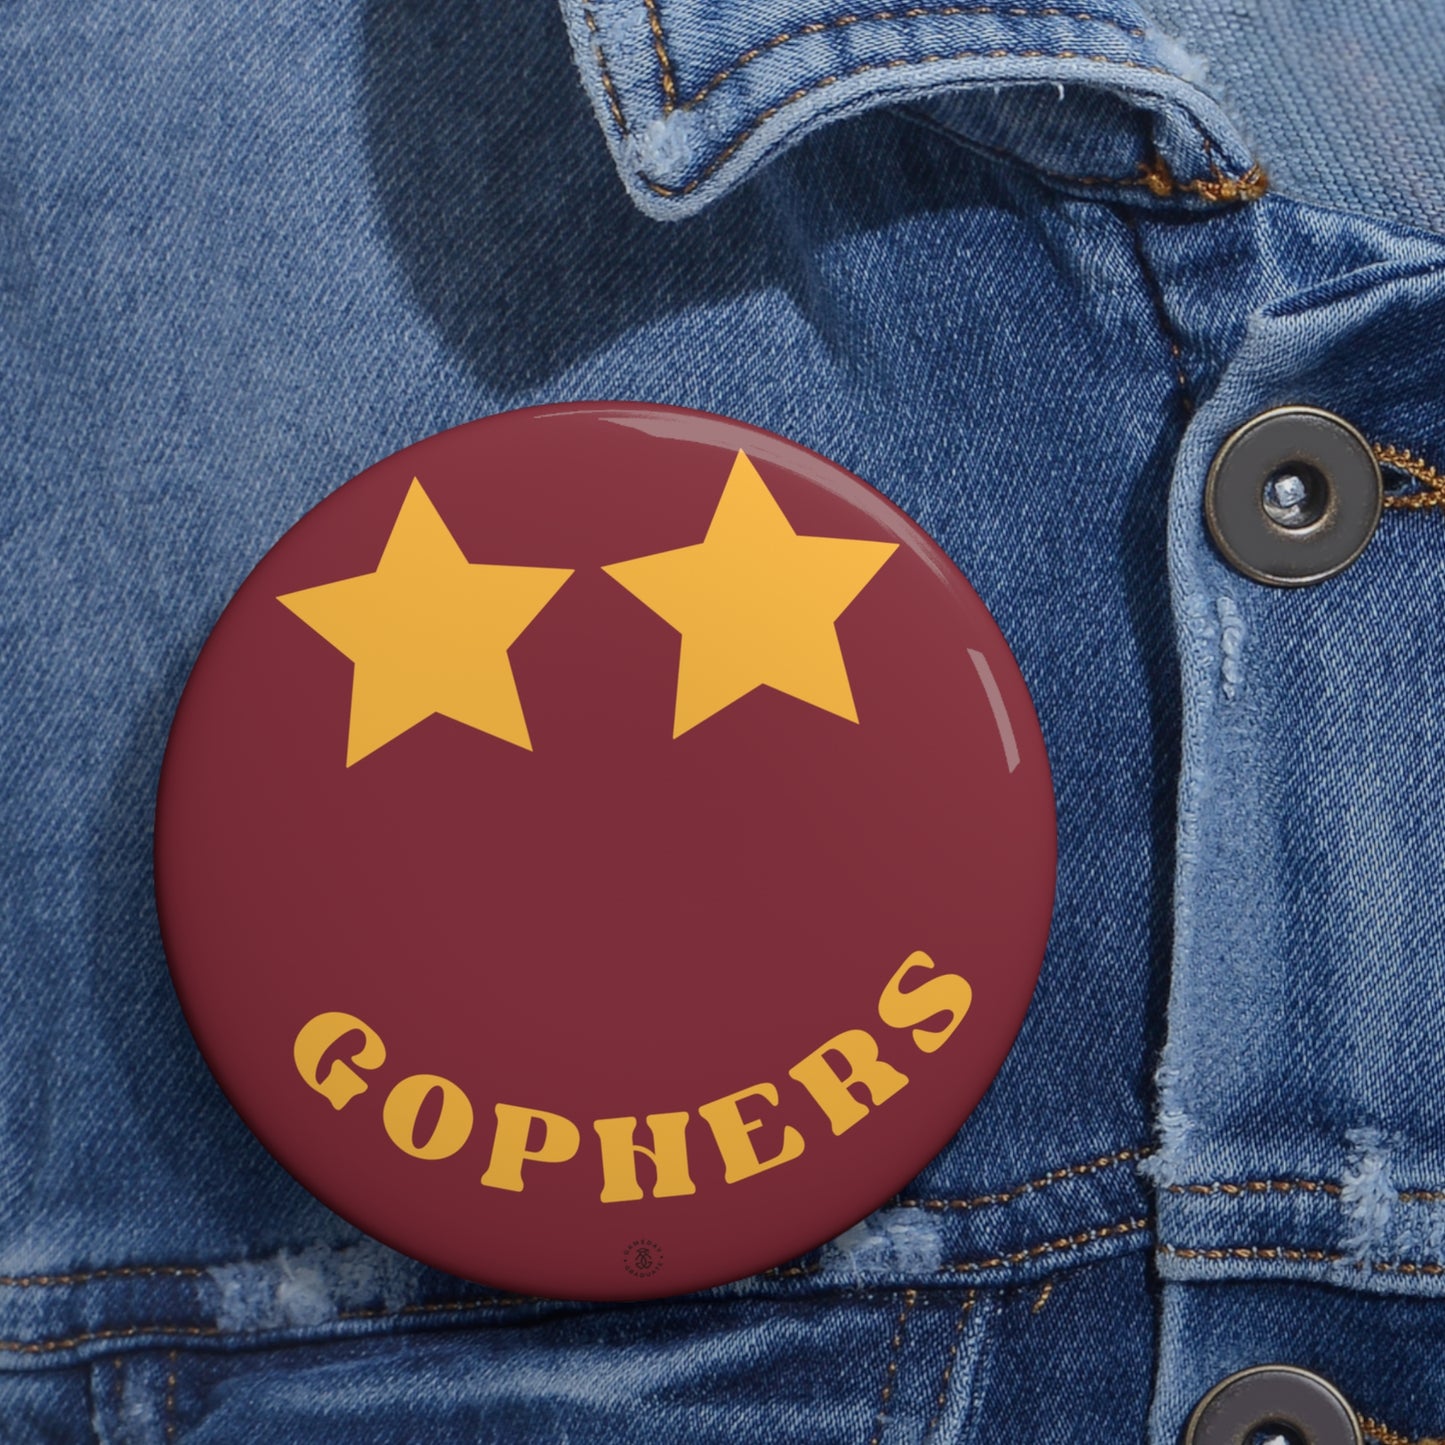 Gophers Star Button